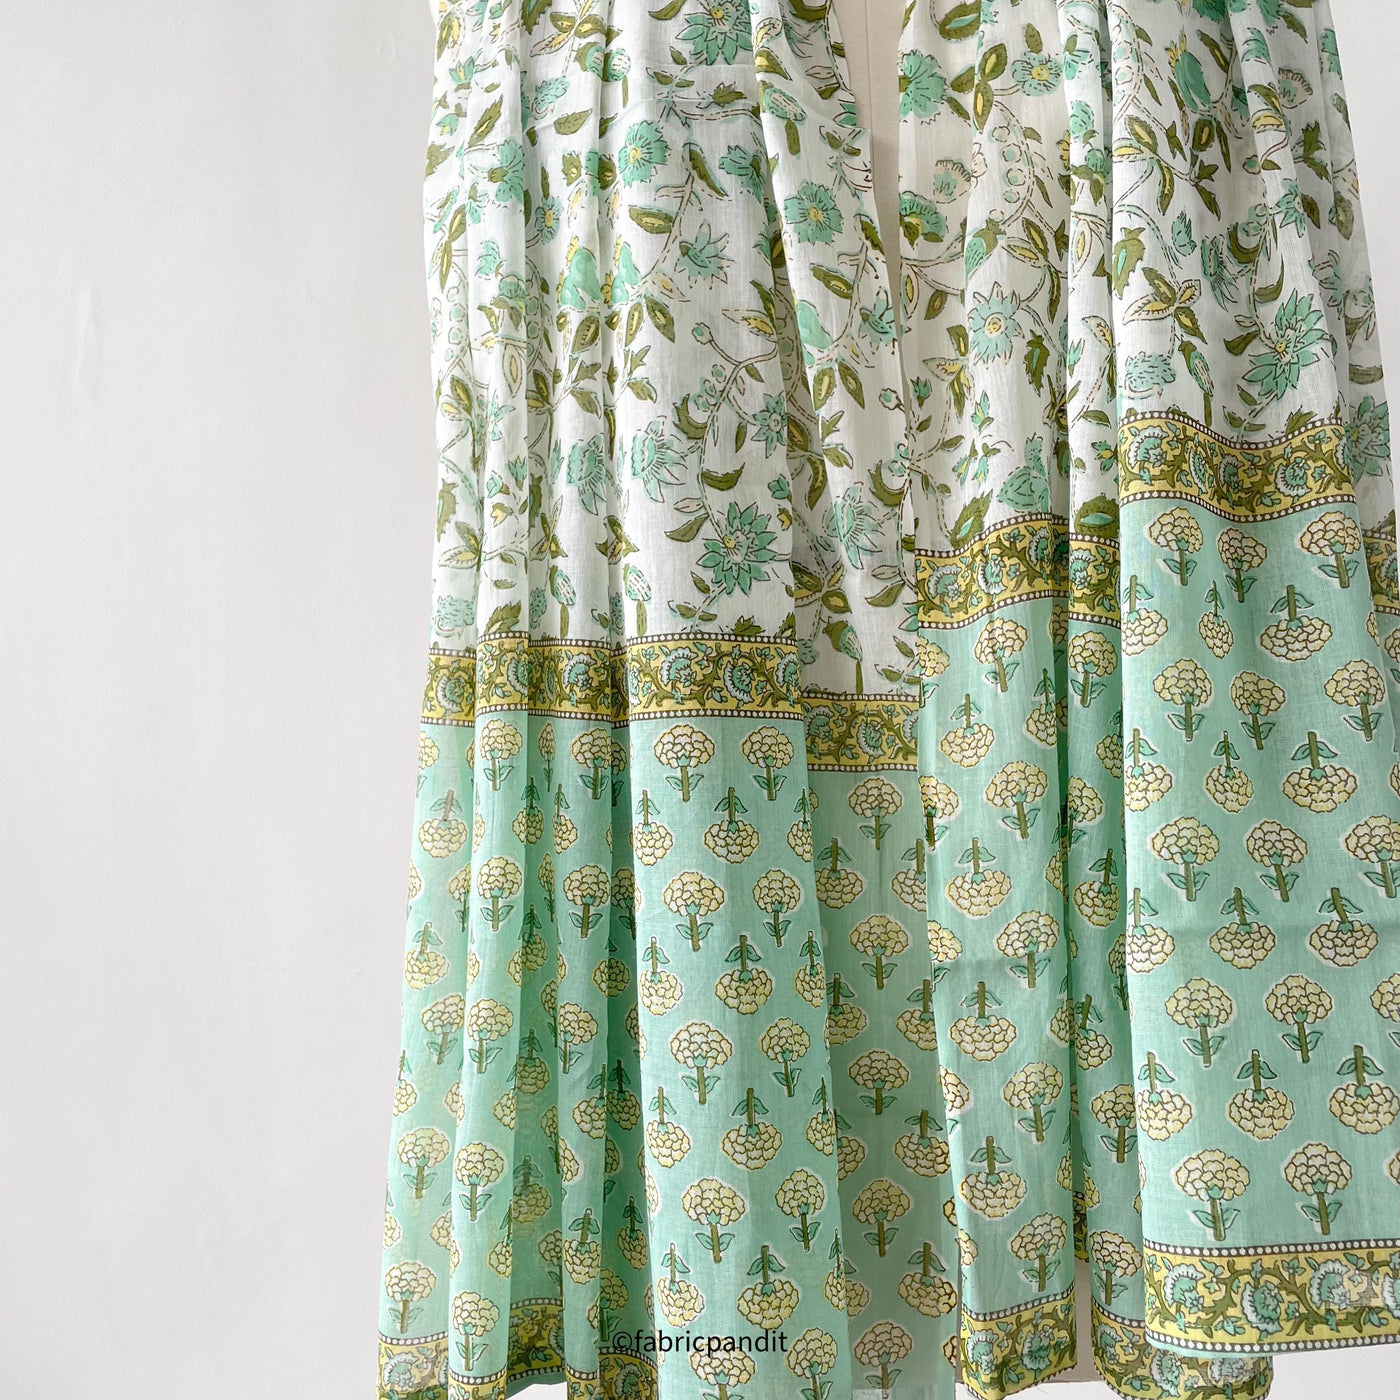 Fabric Pandit Dupatta Aqua Green & Yellow Floral Vines Hand Block Printed Pure Cotton Dupatta (2.5 mtr)